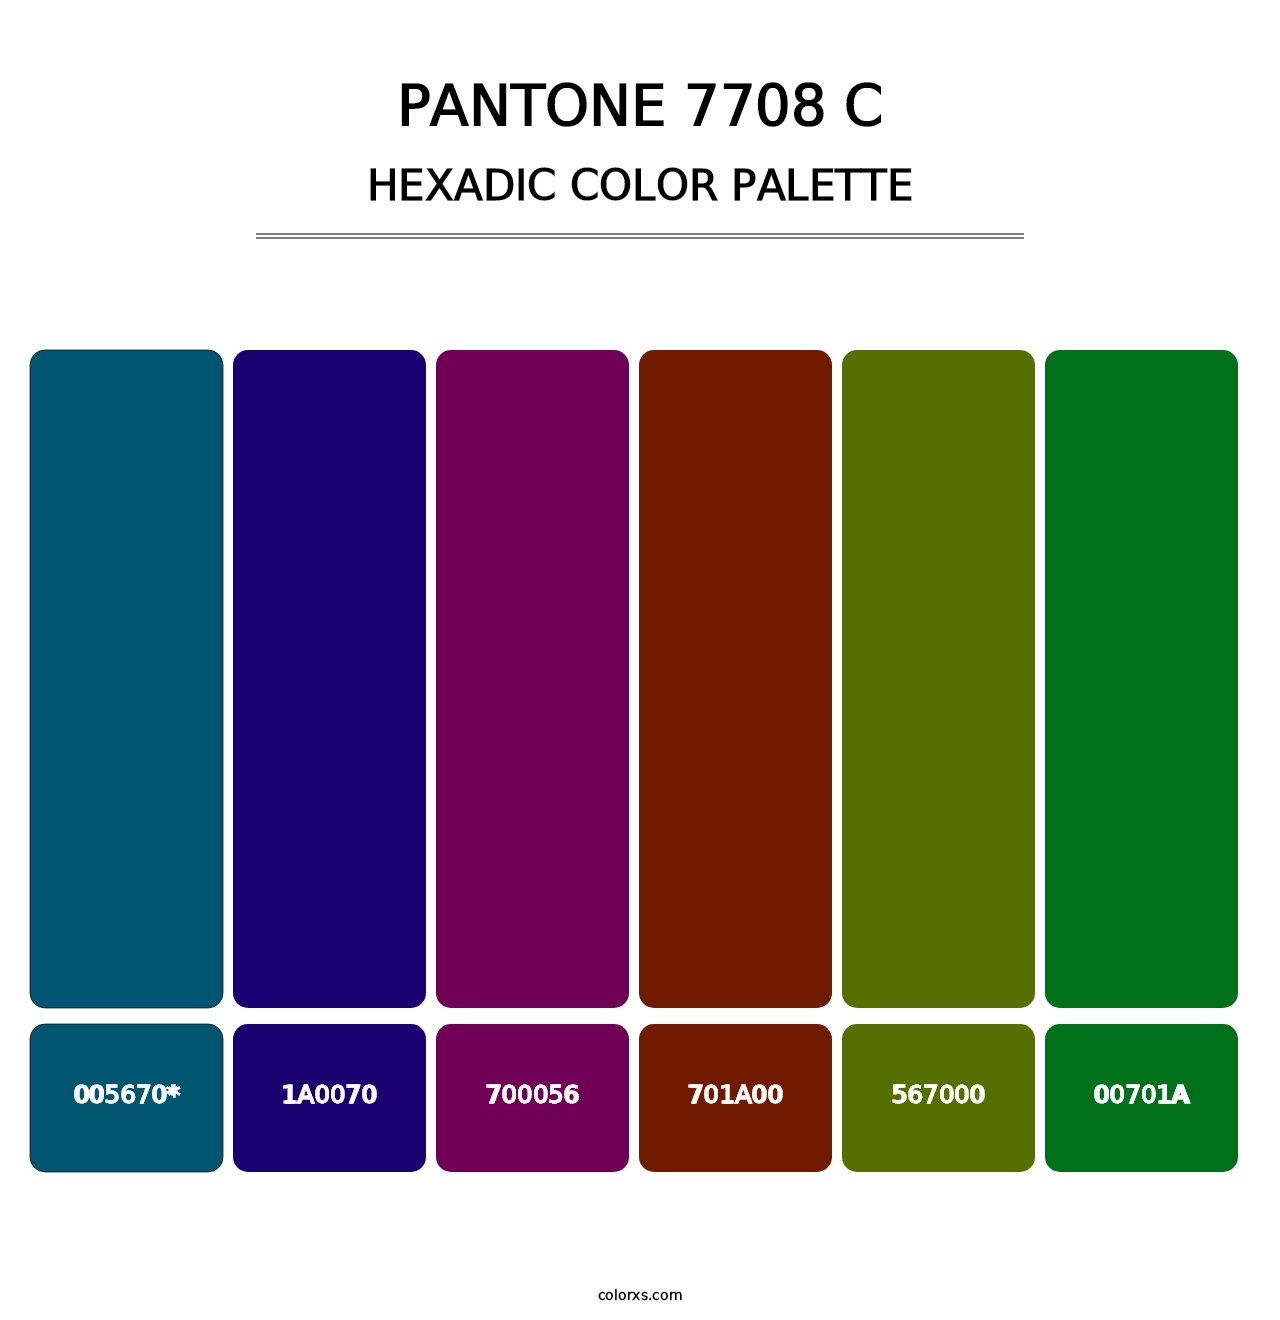 PANTONE 7708 C - Hexadic Color Palette